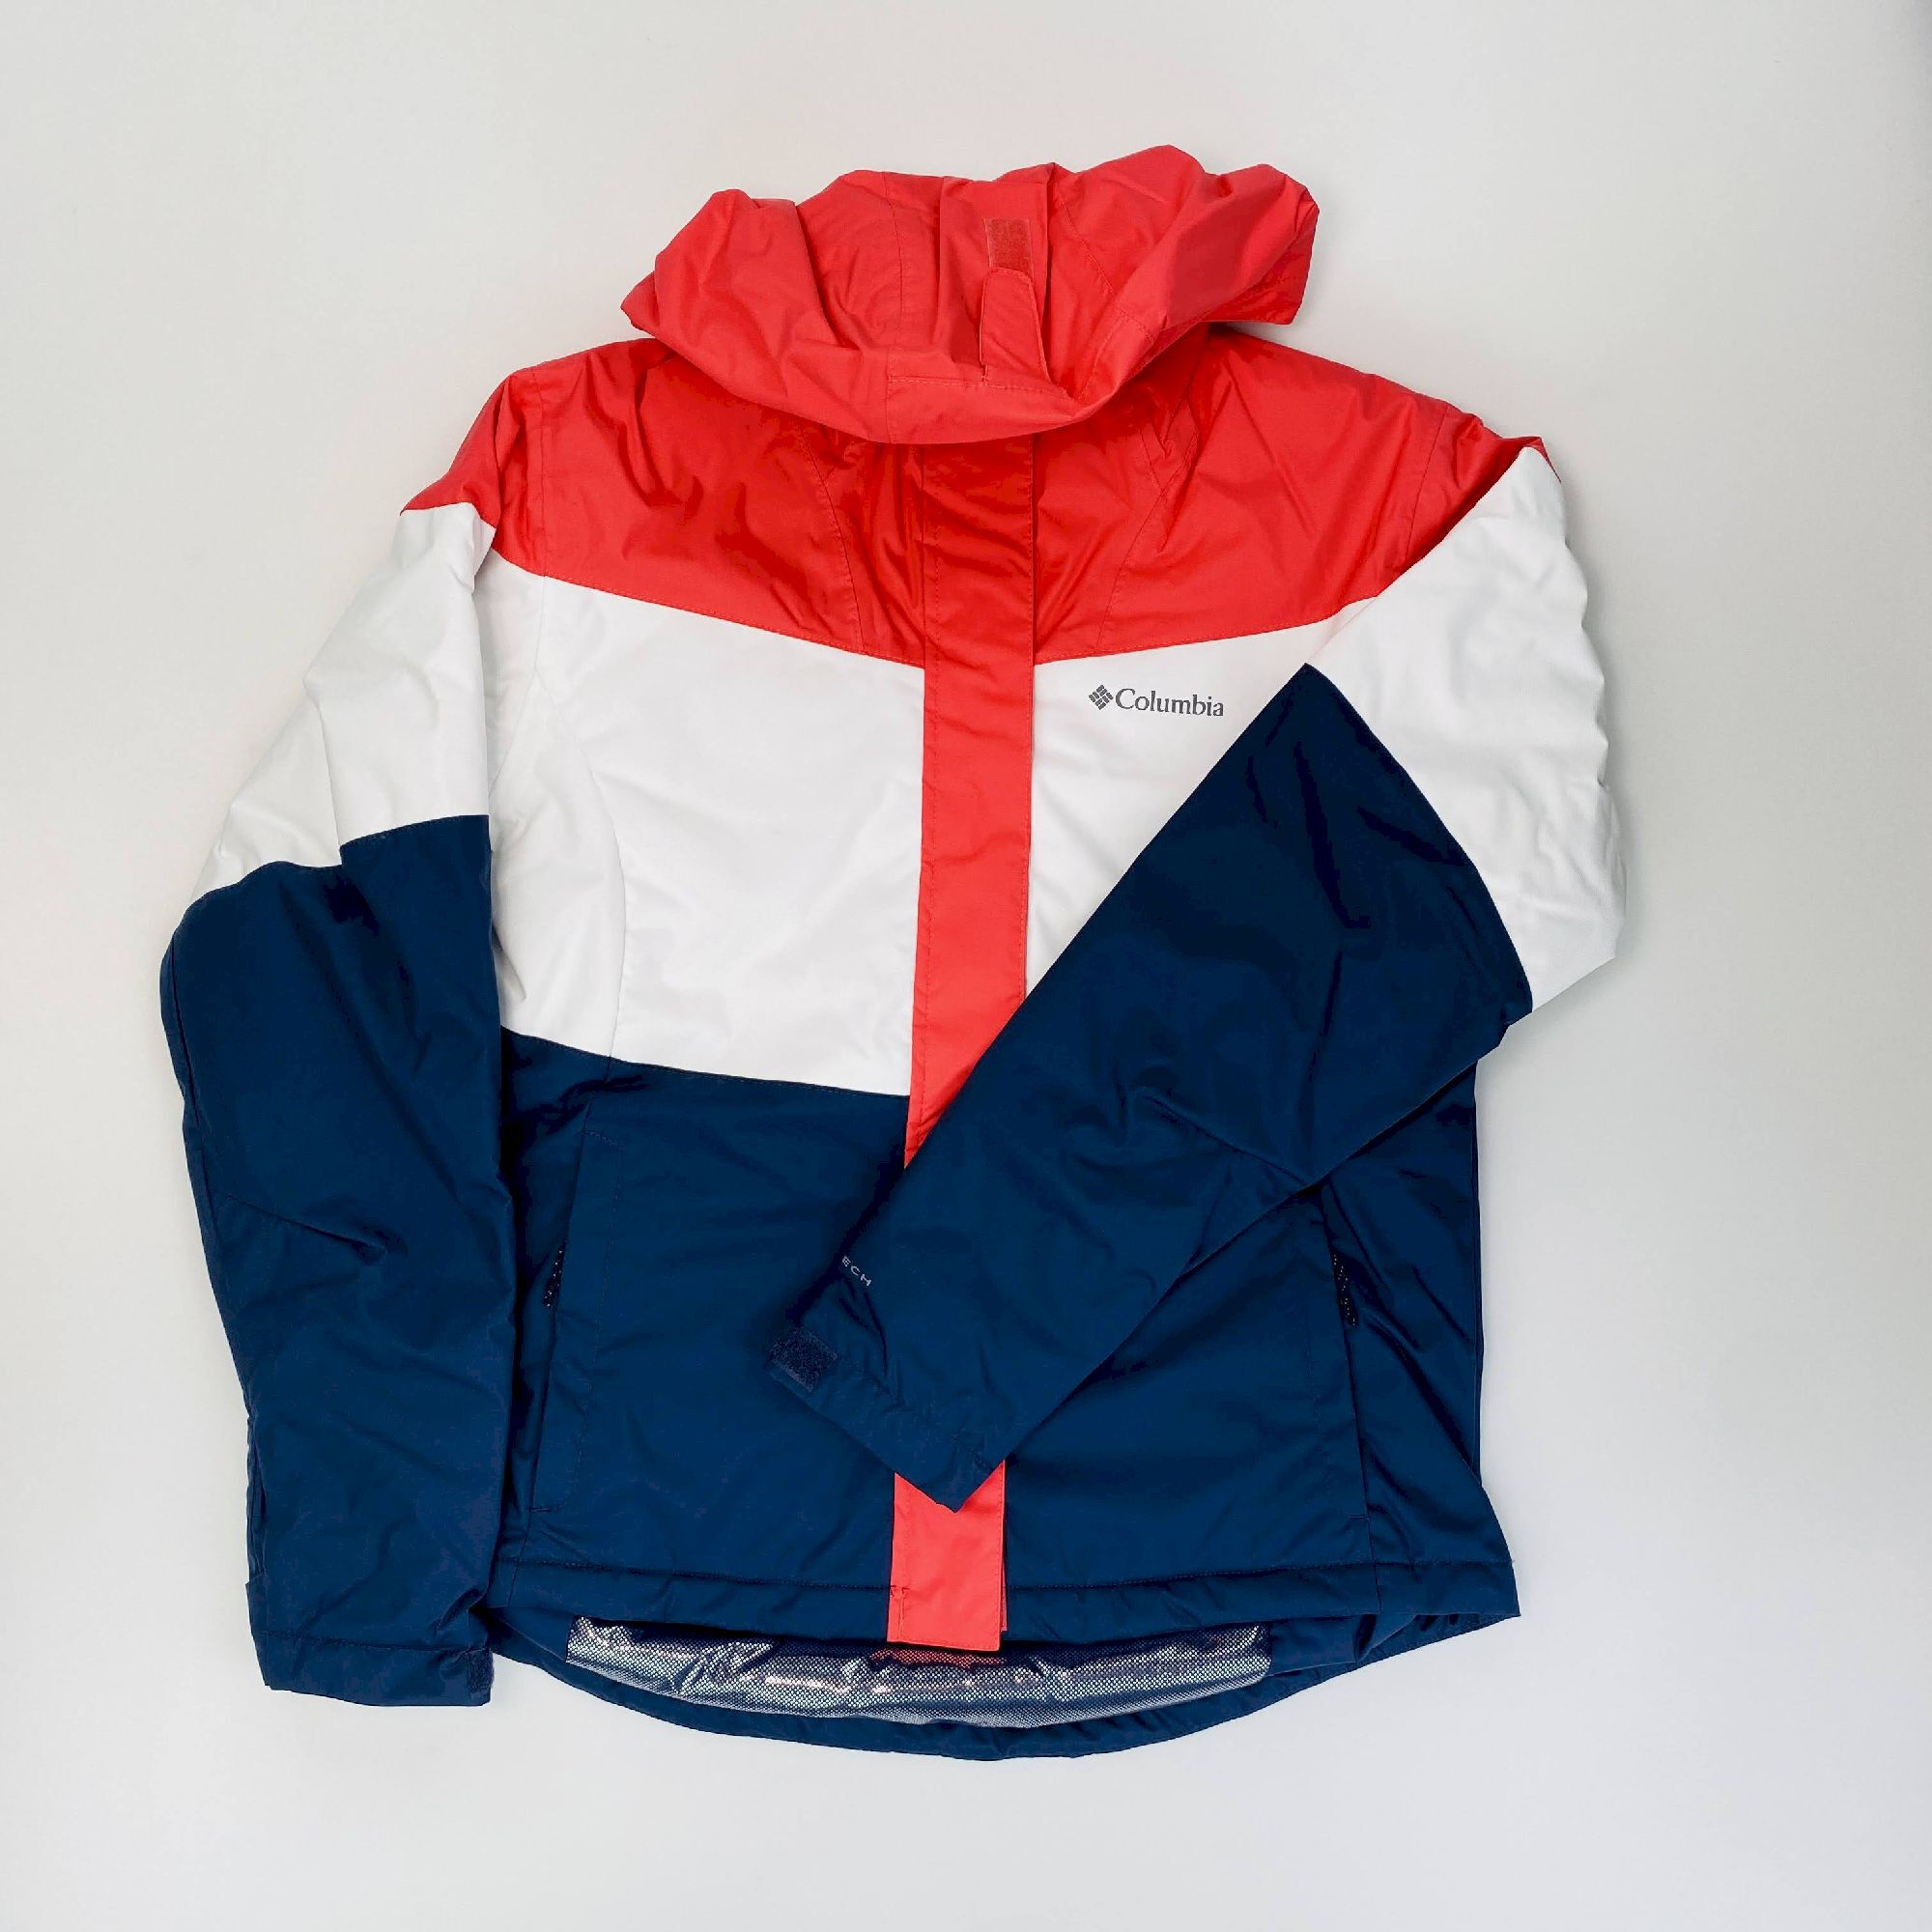 Columbia Tipton Peak™ II Insulated Jacket - Giacca antipioggia di seconda mano - Donna - Multicolore - M | Hardloop